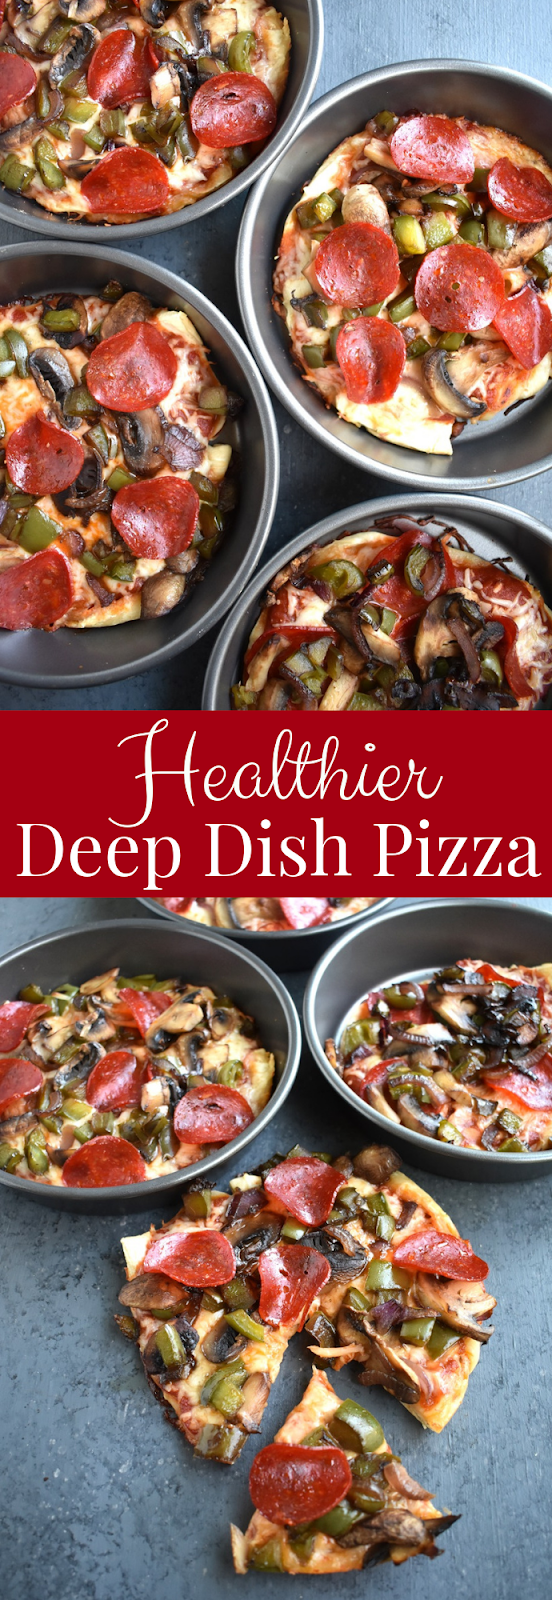 Healthier deep dish pizza recipe